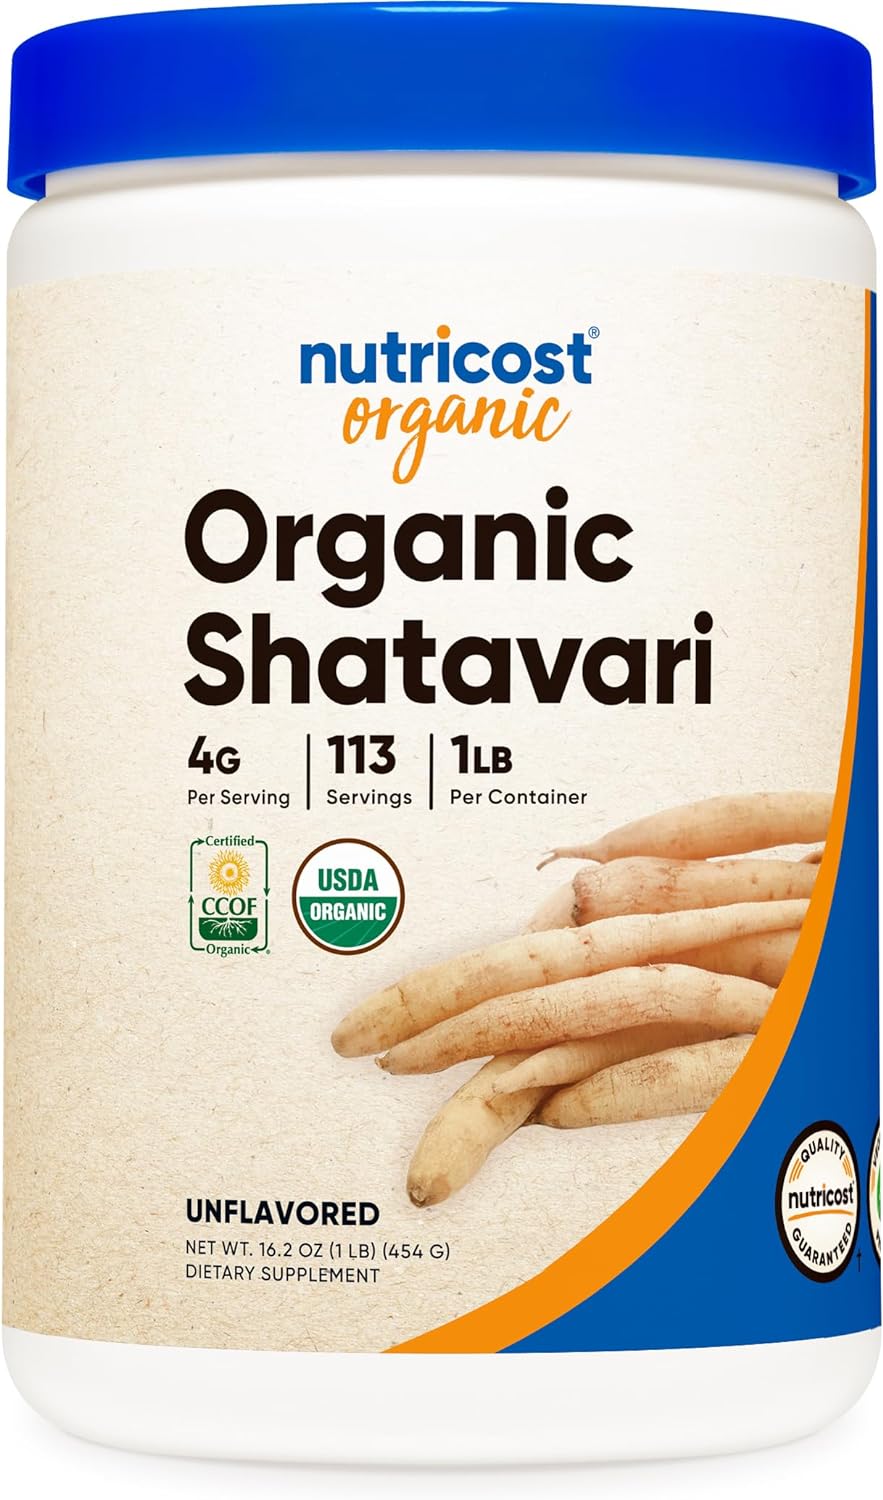 Nutricost Organic Shatavari Powder 1 LB - Certified USDA Organic, Non-GMO, Gluten Free, and Vegetarian Friendly